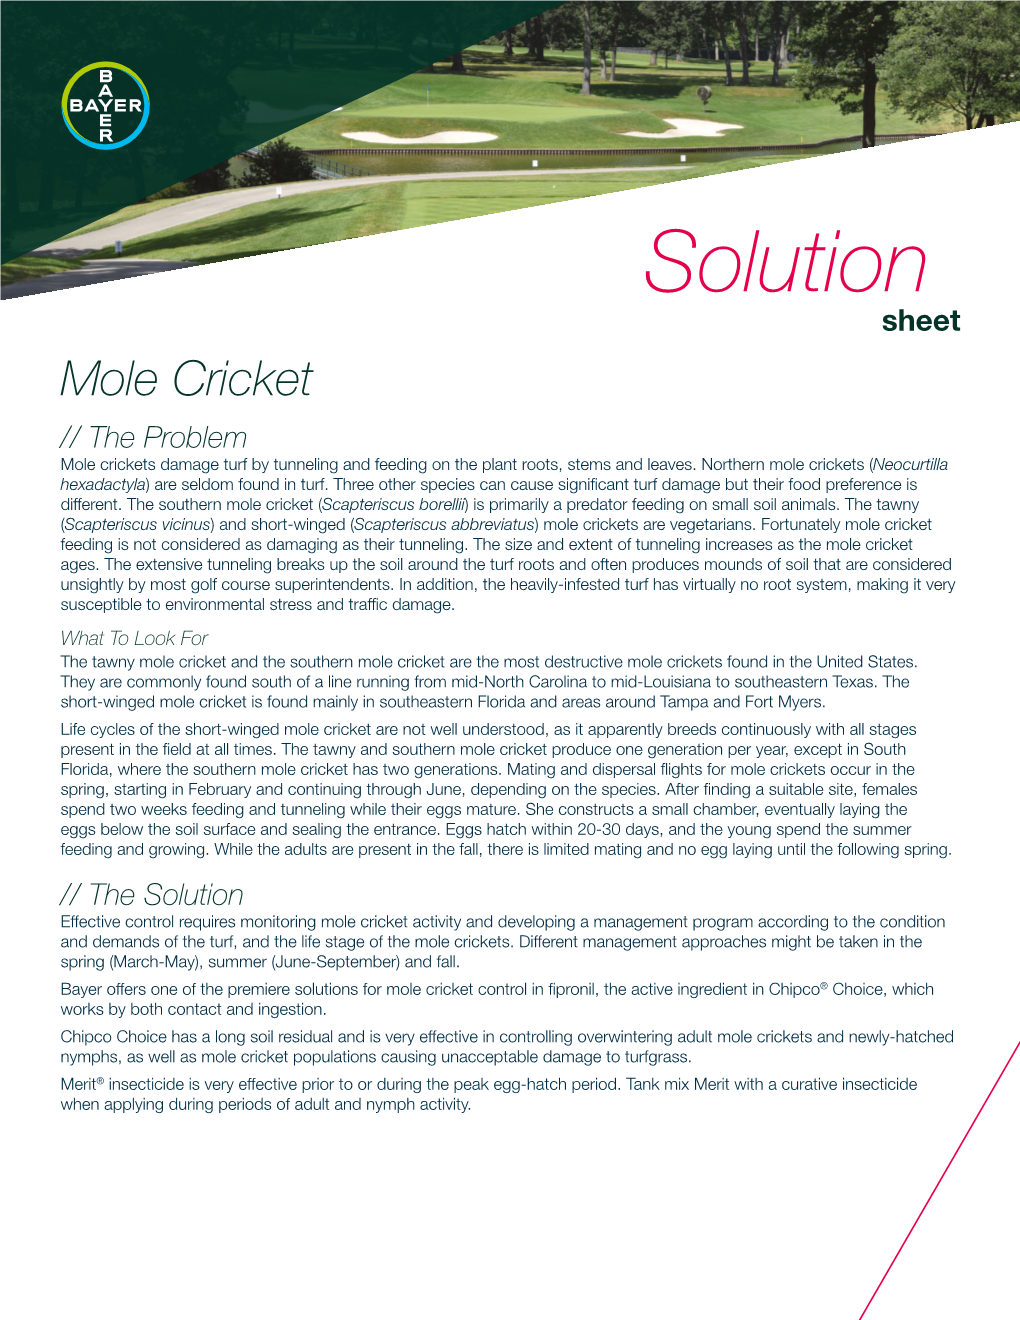 Mole Cricket Solution Sheet